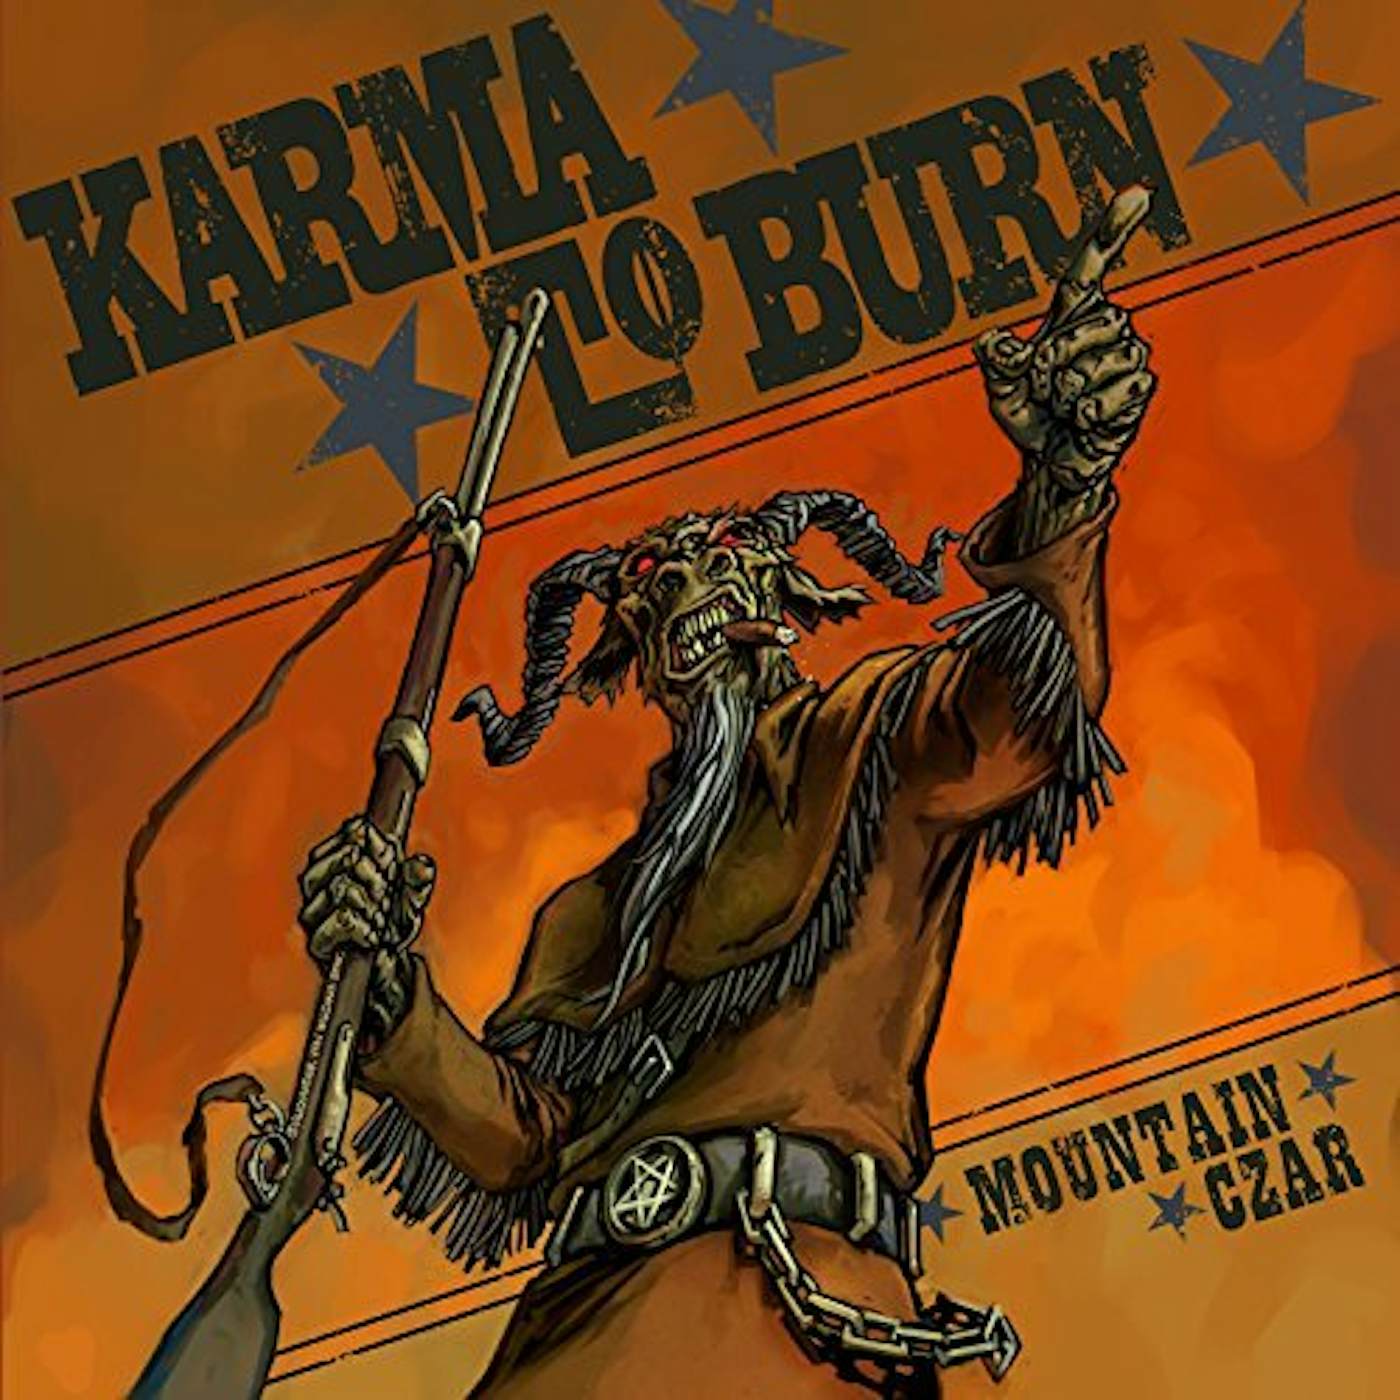 Karma To Burn MOUNTAIN CZAR CD